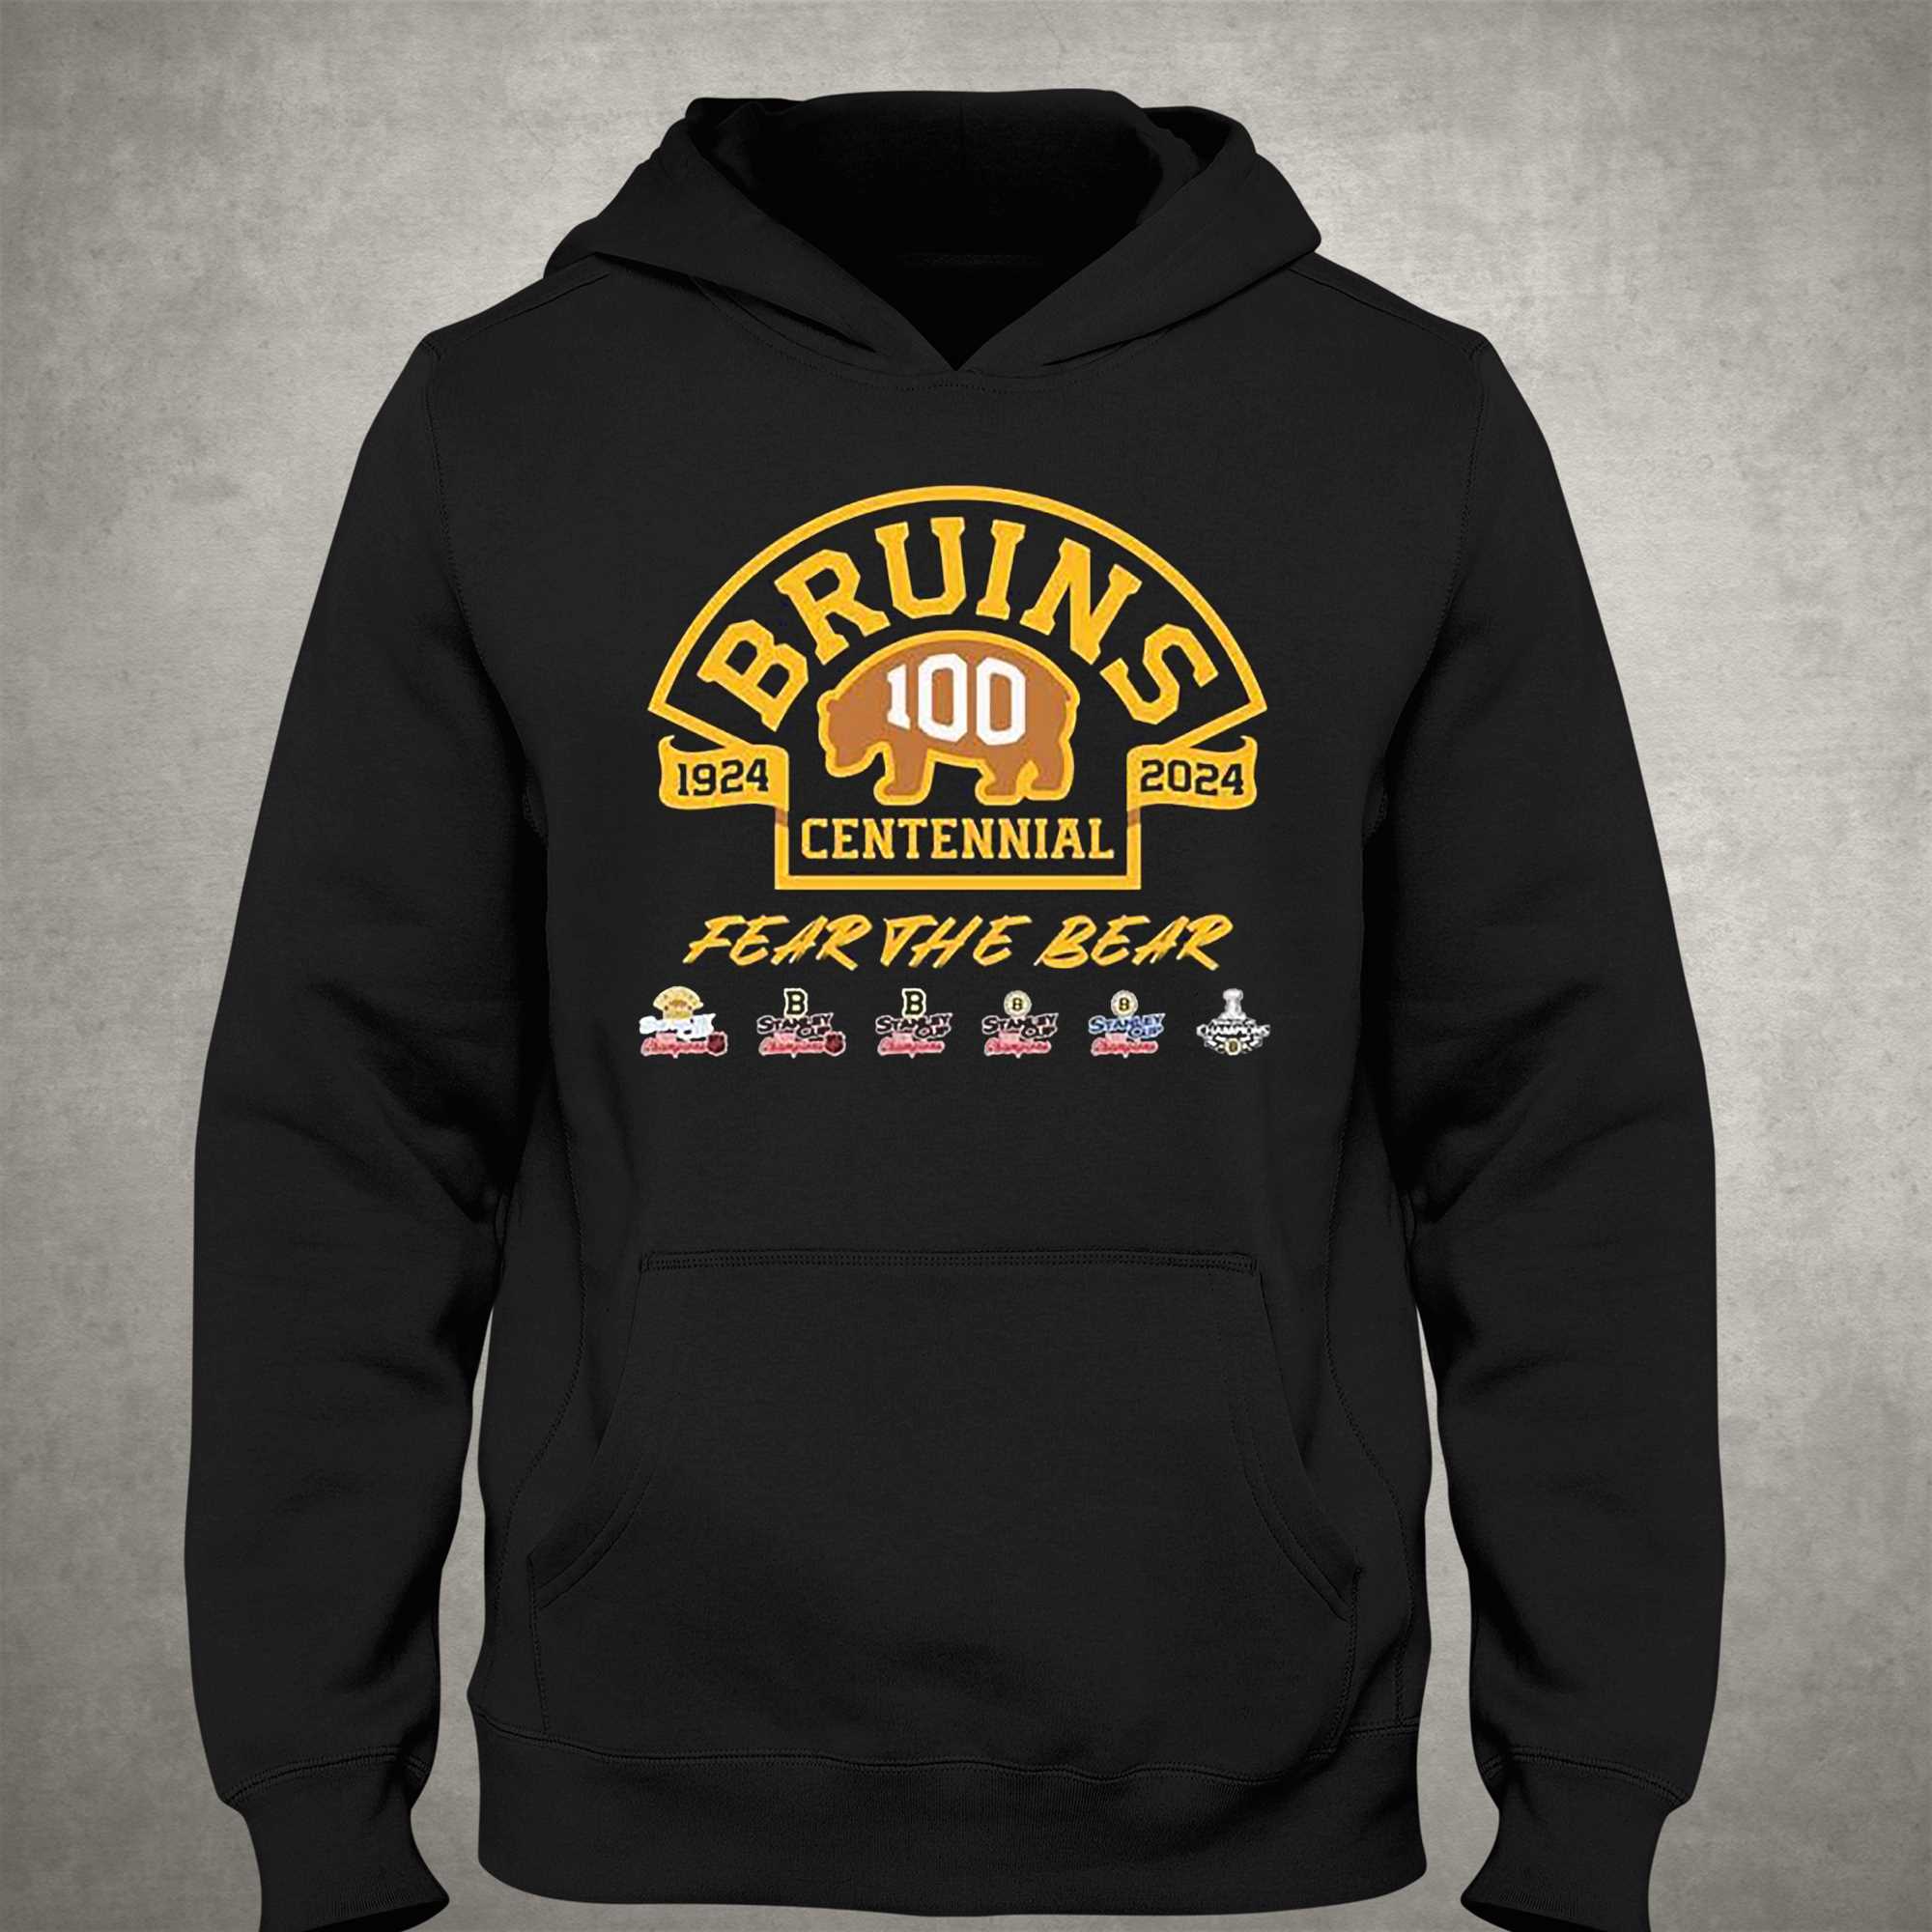 Boston Bruins Gear, Bruins 100th Anniversary Jerseys, Boston